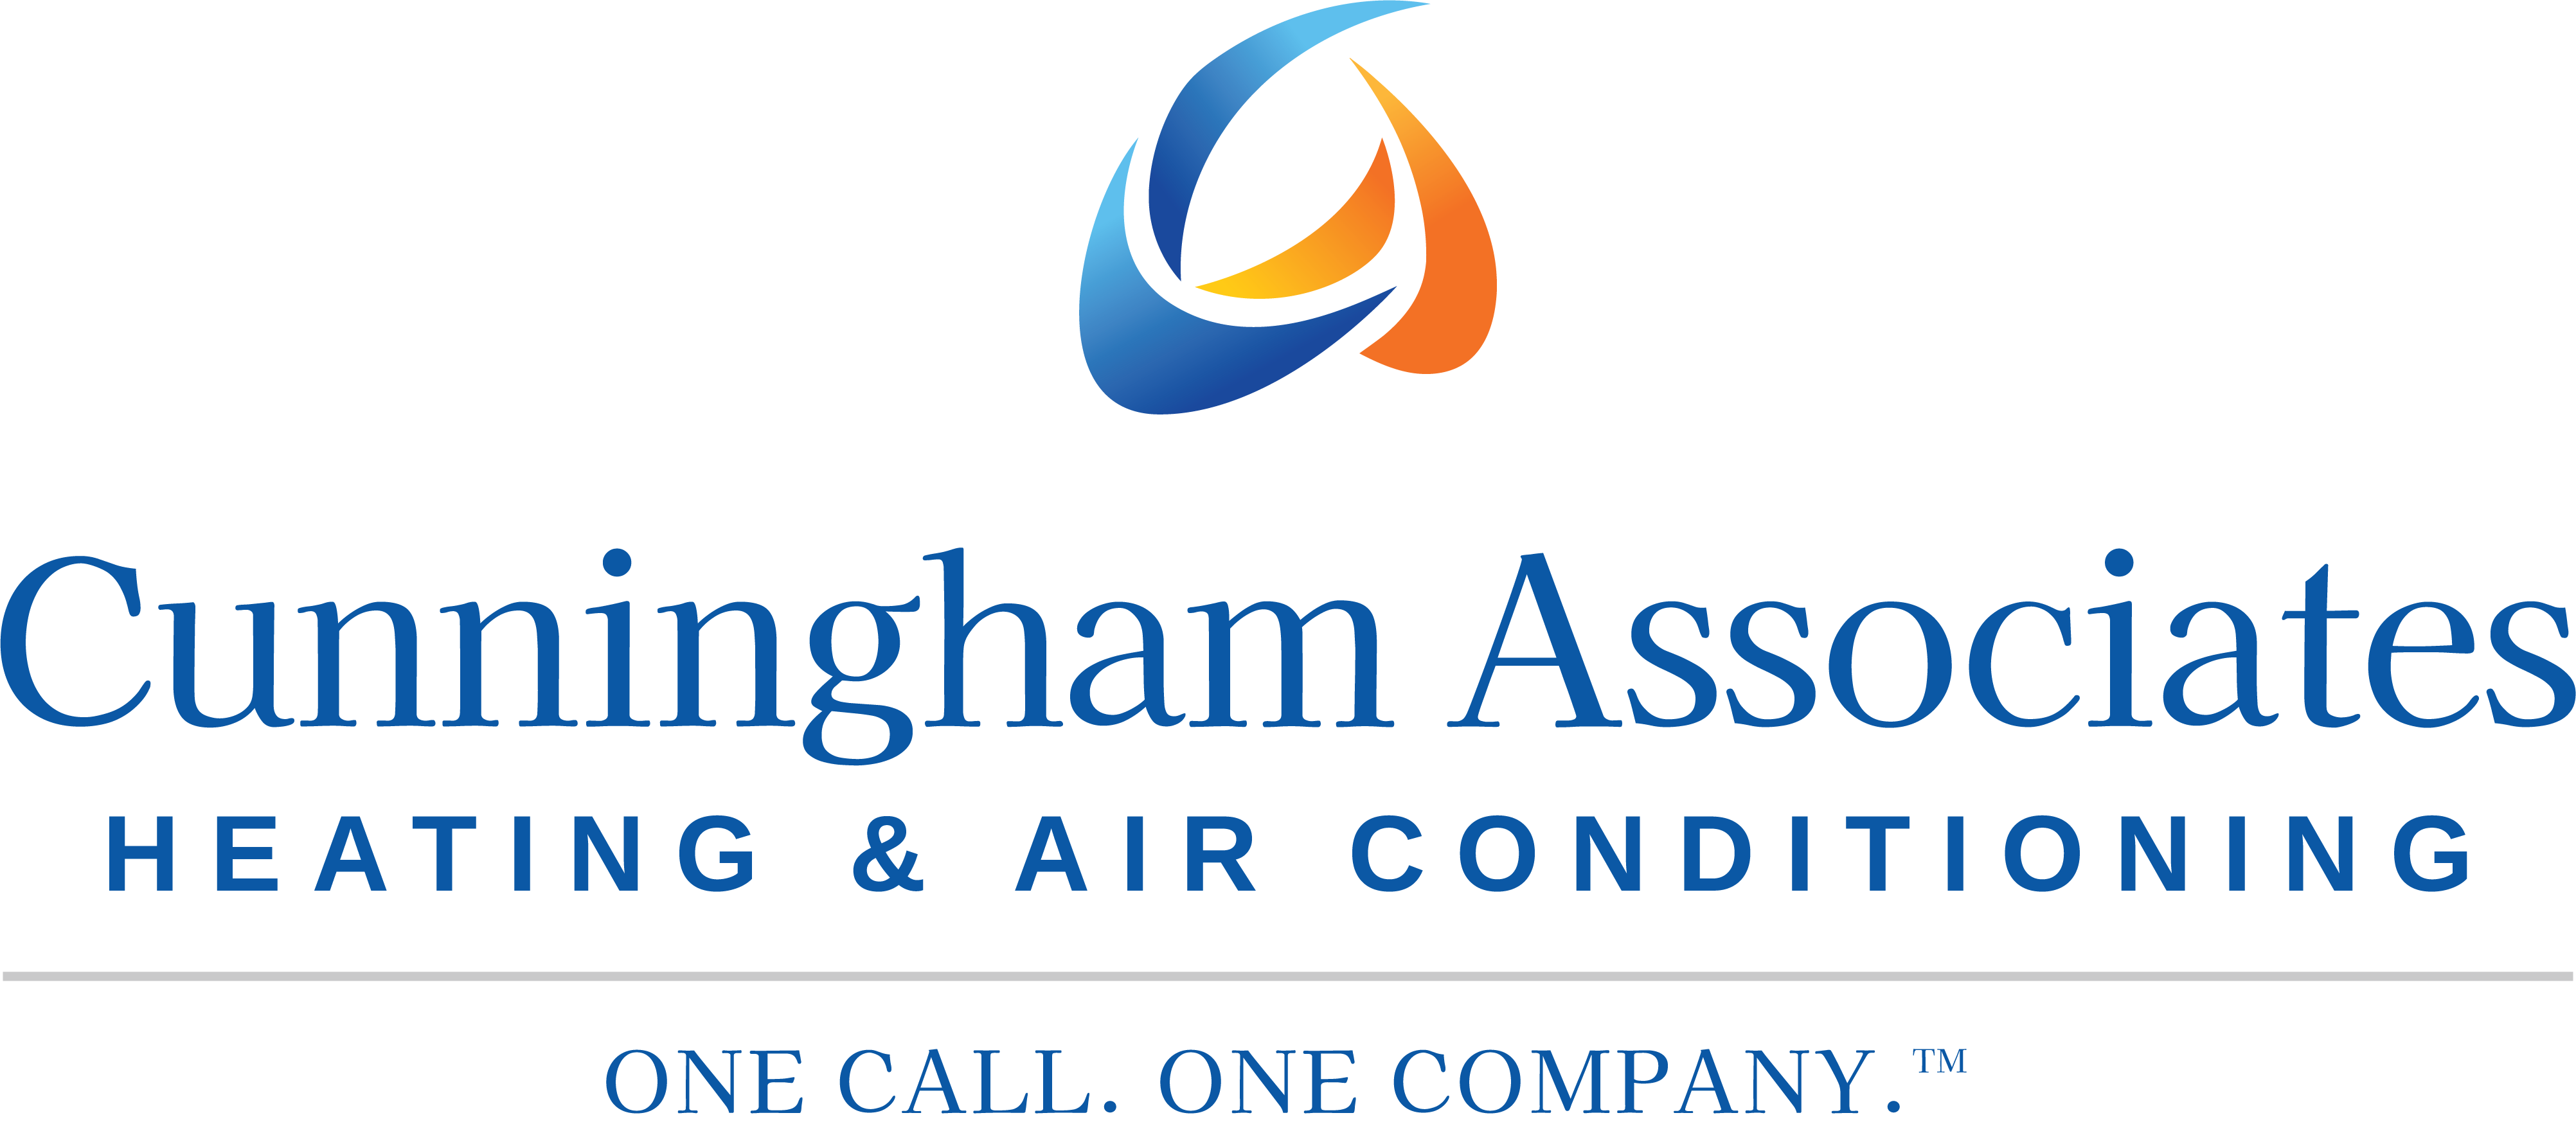 Cunningham Associates